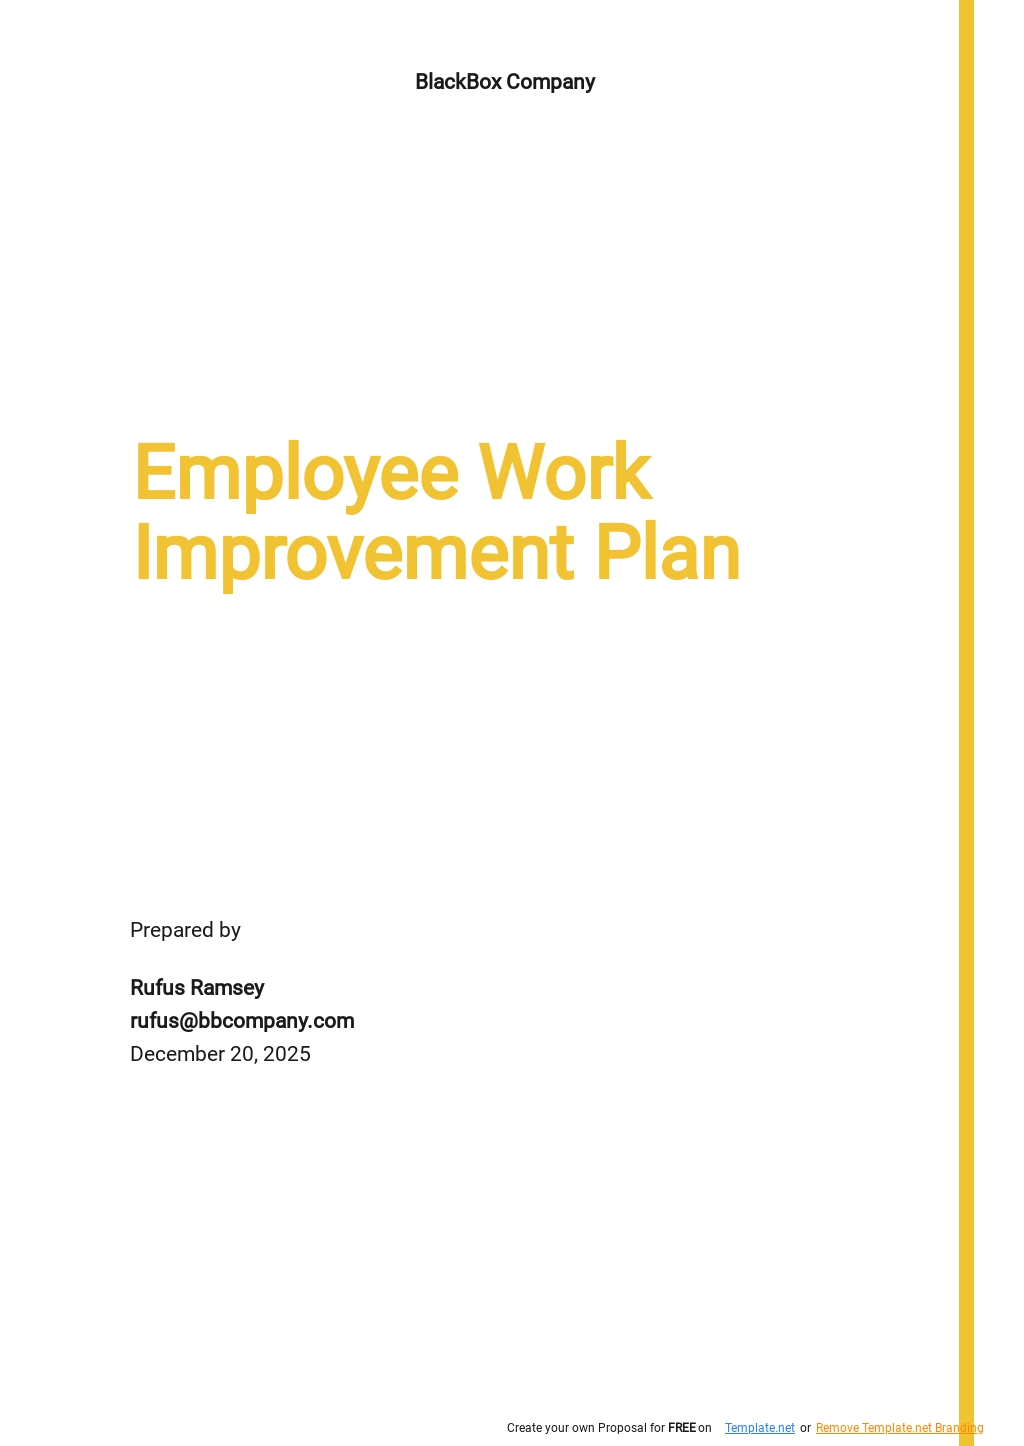 Employee Work Improvement Plan Template.jpe